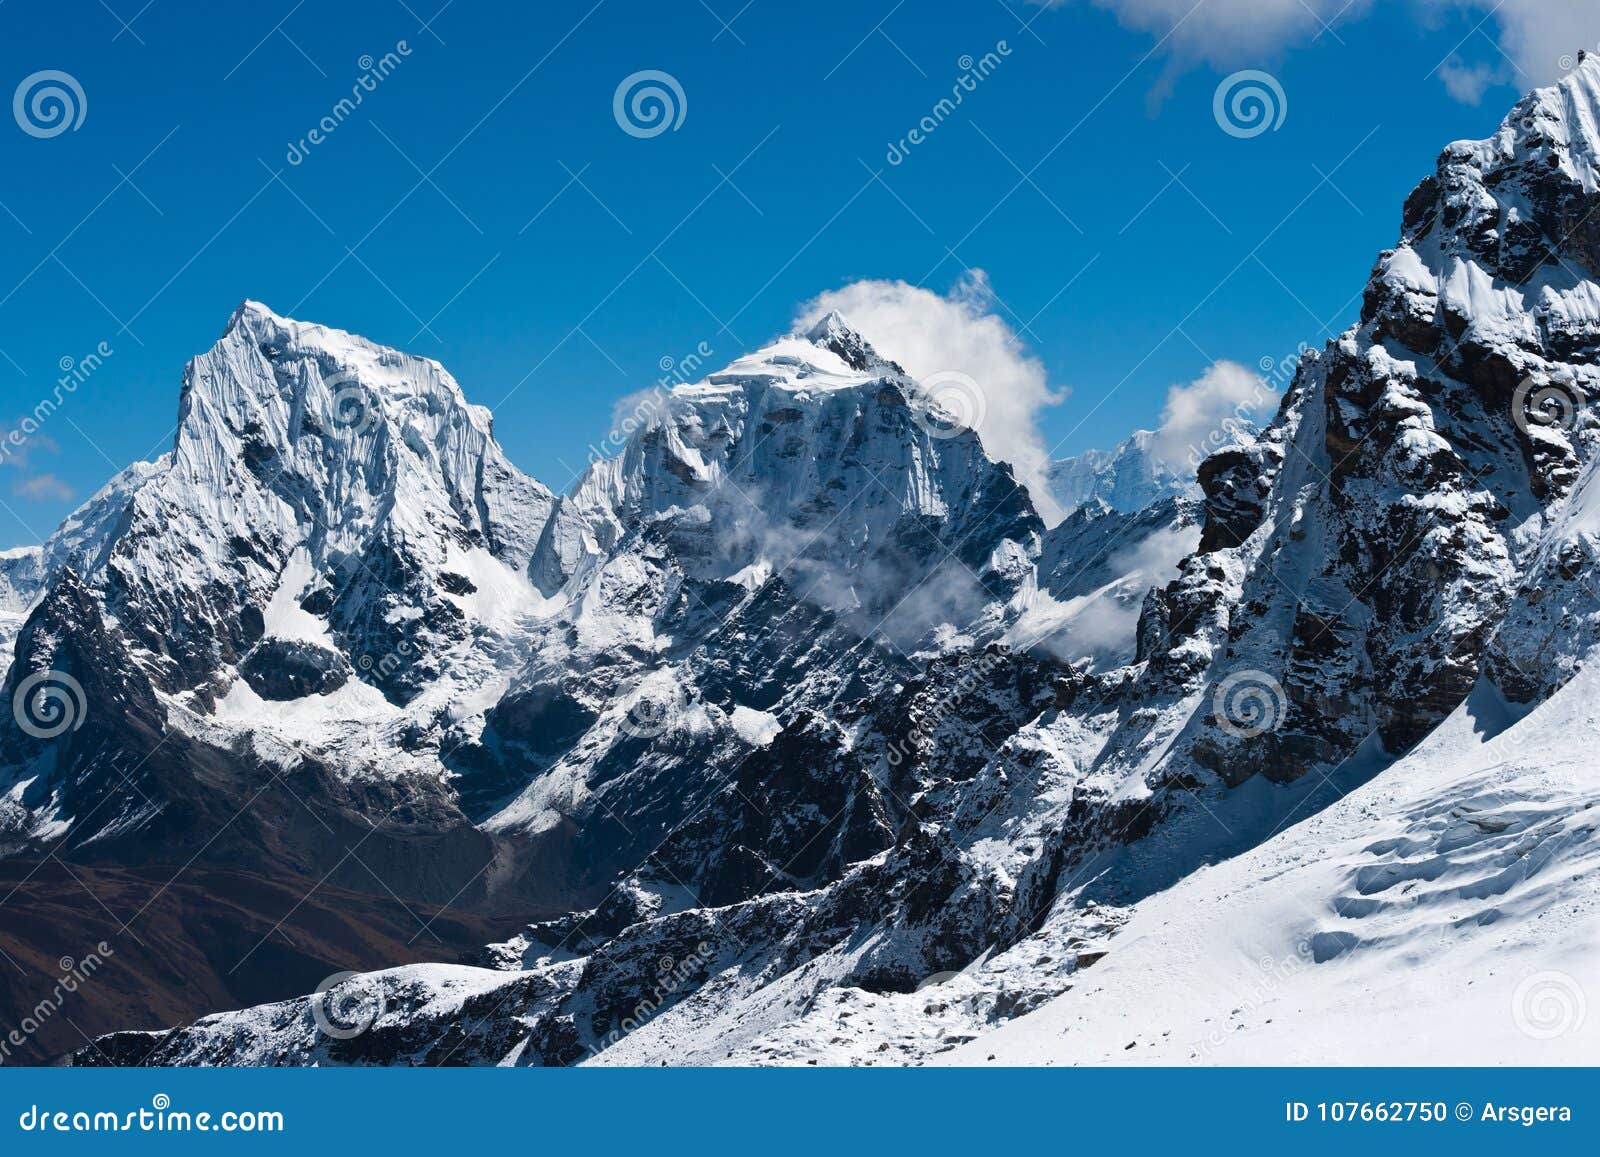 cholatse and taboche summits viewed from renjo pass